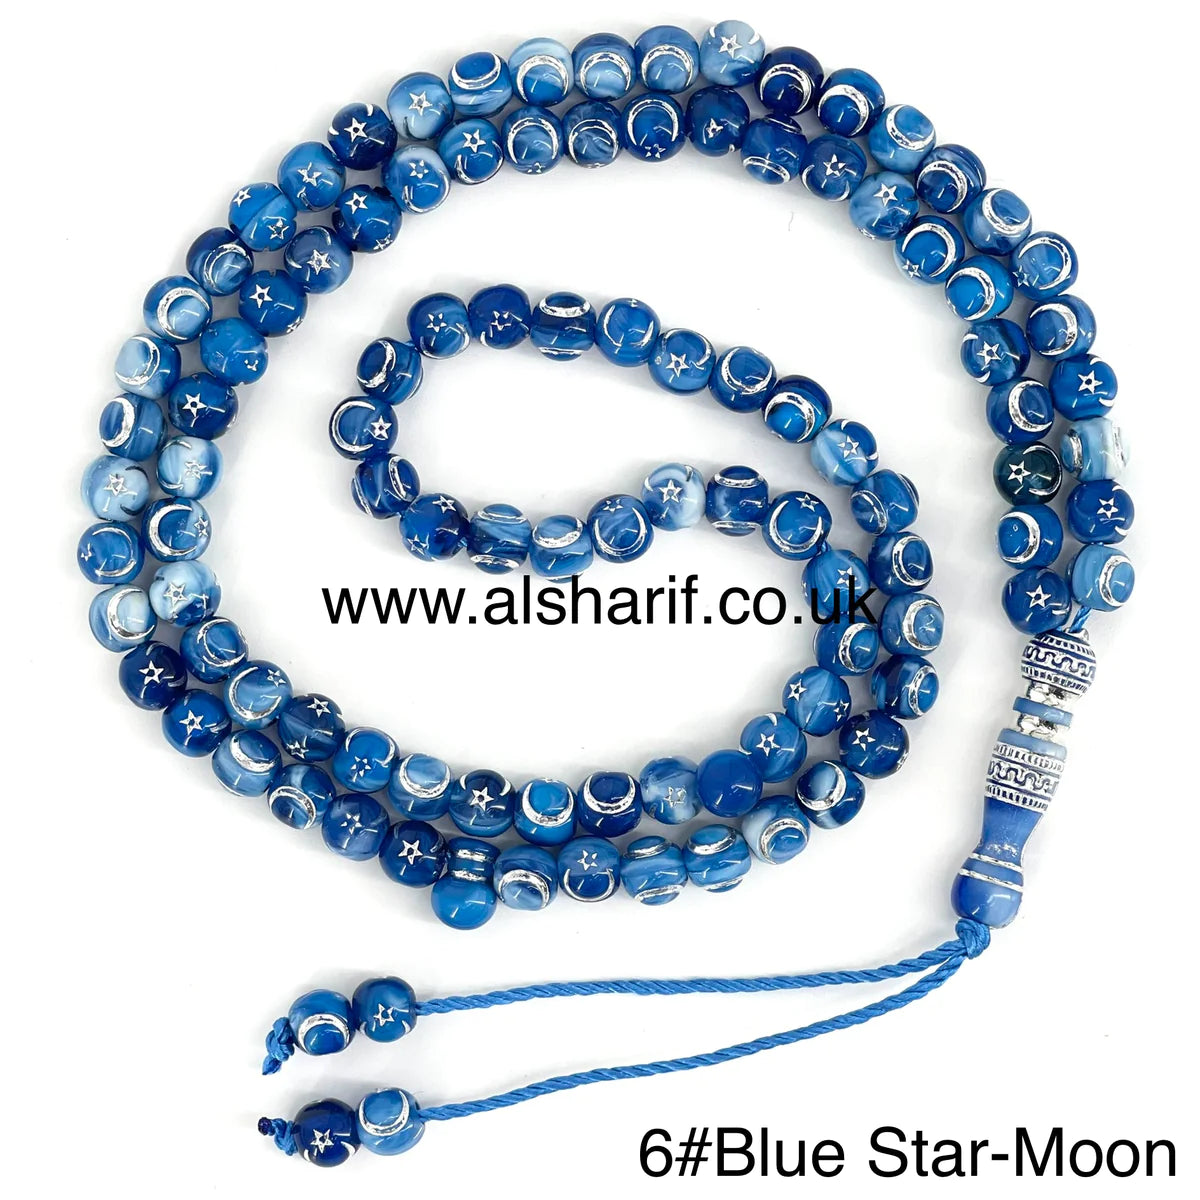 Tasbeeh 99 Beads 6#Blue Star-Moon